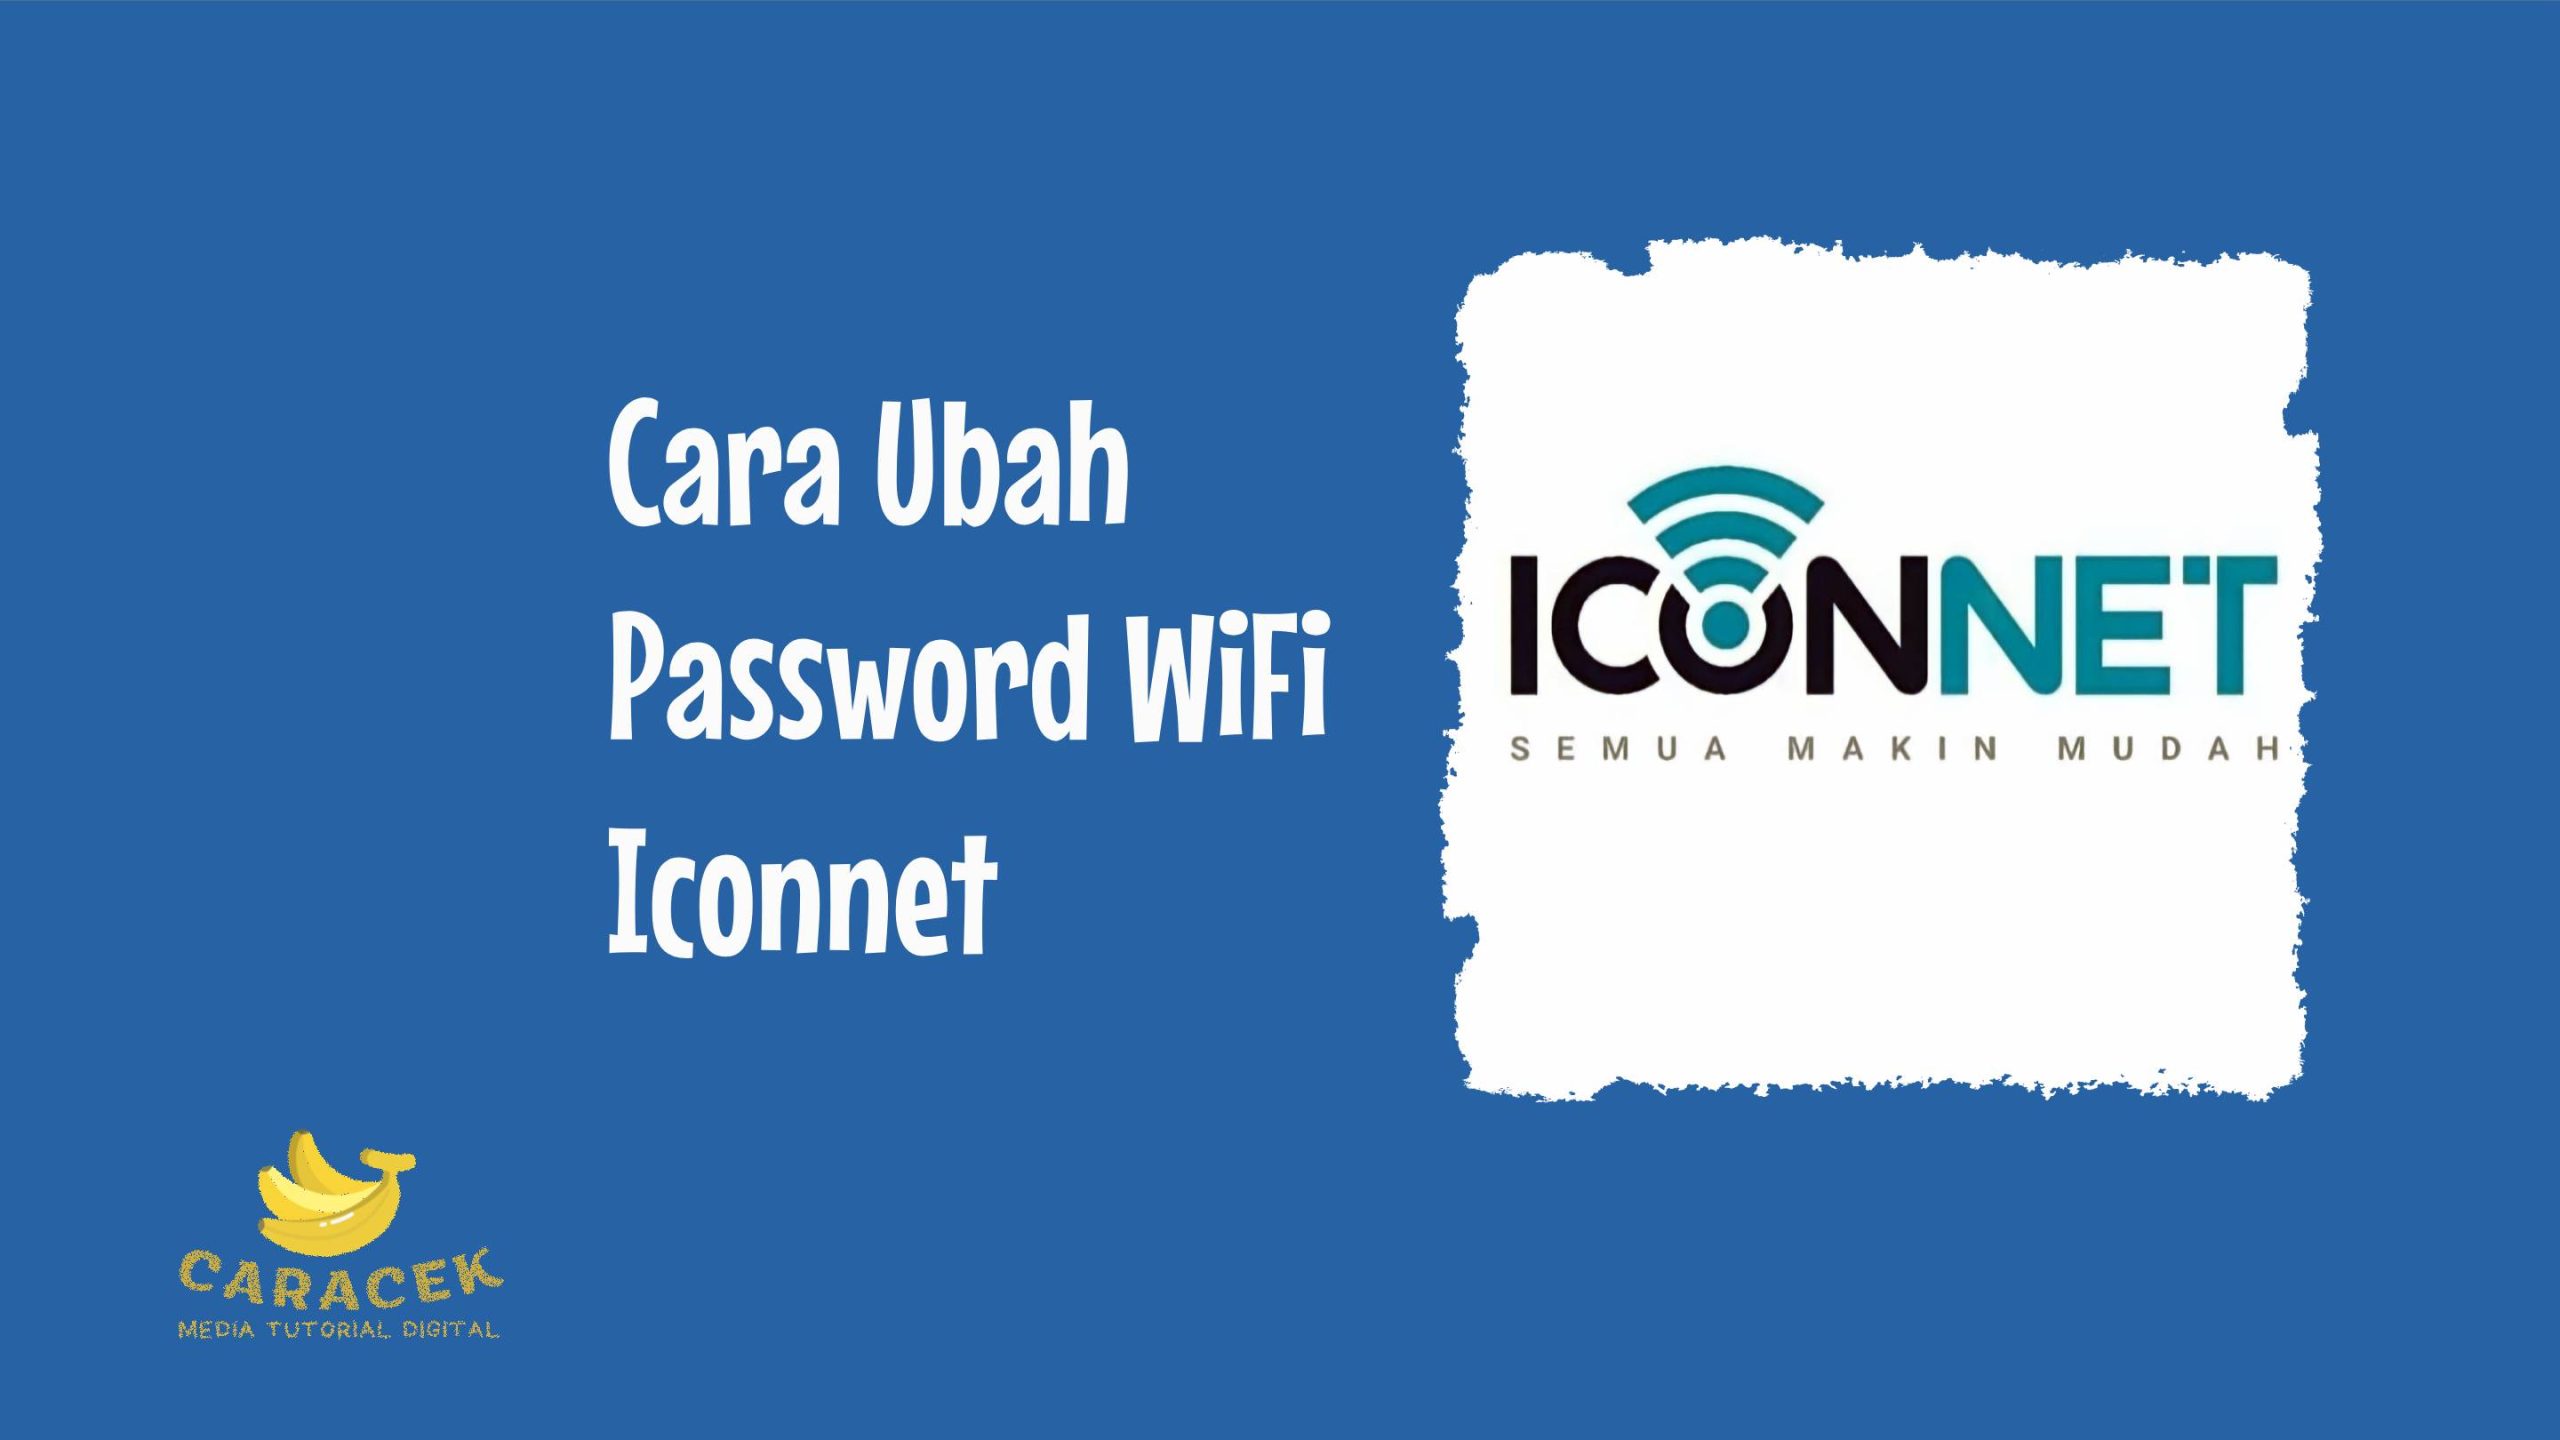 Cara Ubah Password WiFi Iconnet